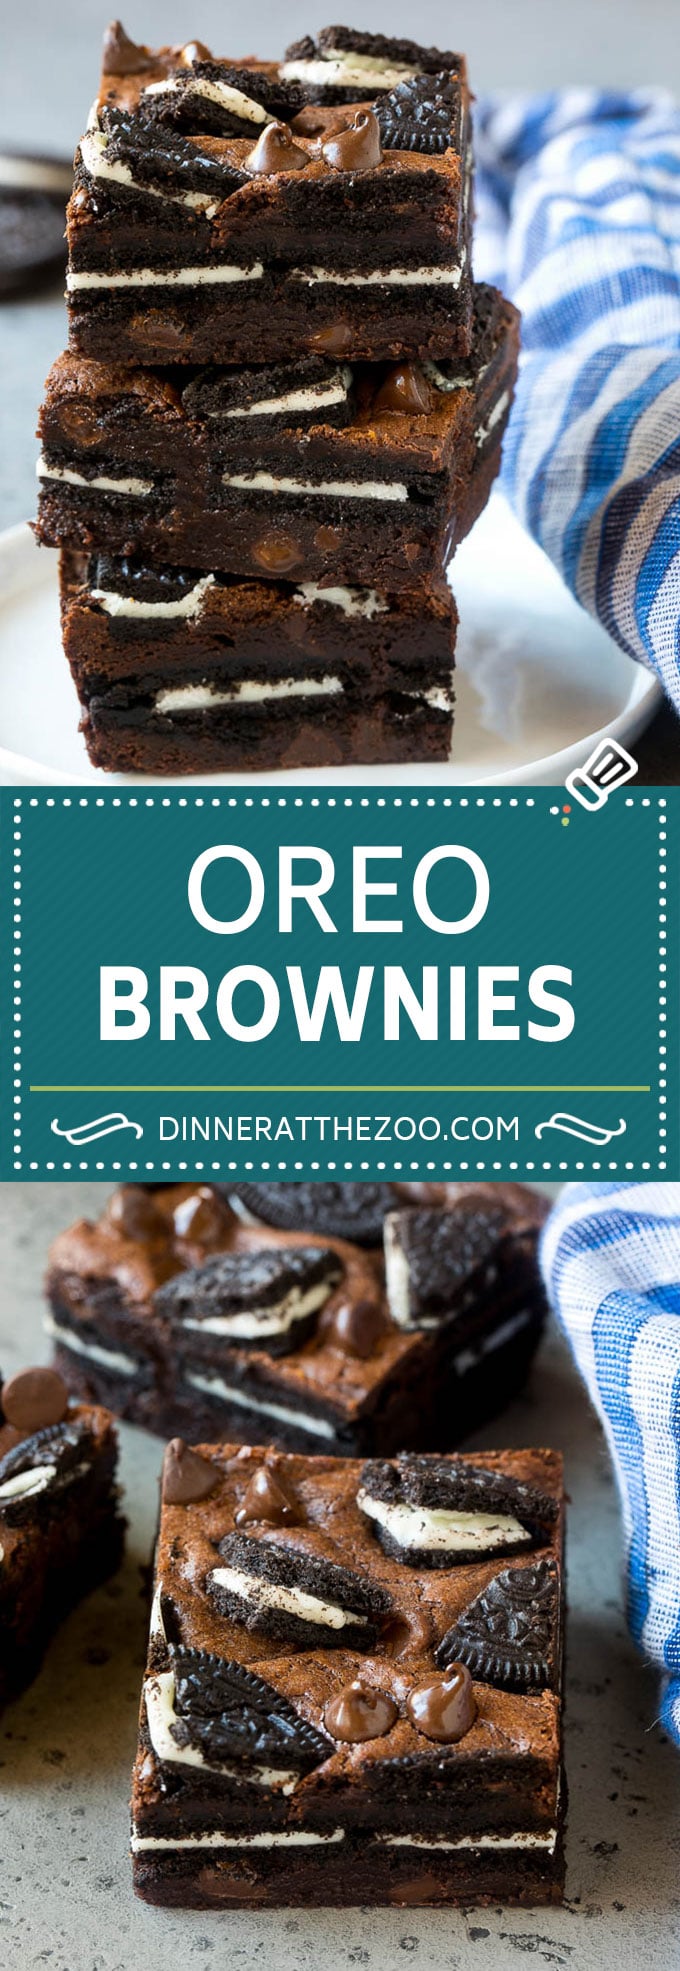 Oreo Brownies Recipe | Homemade Brownies | Chocolate Chip Brownies #brownies #oreos #chocolate #dessert #sweets #dinneratthezoo